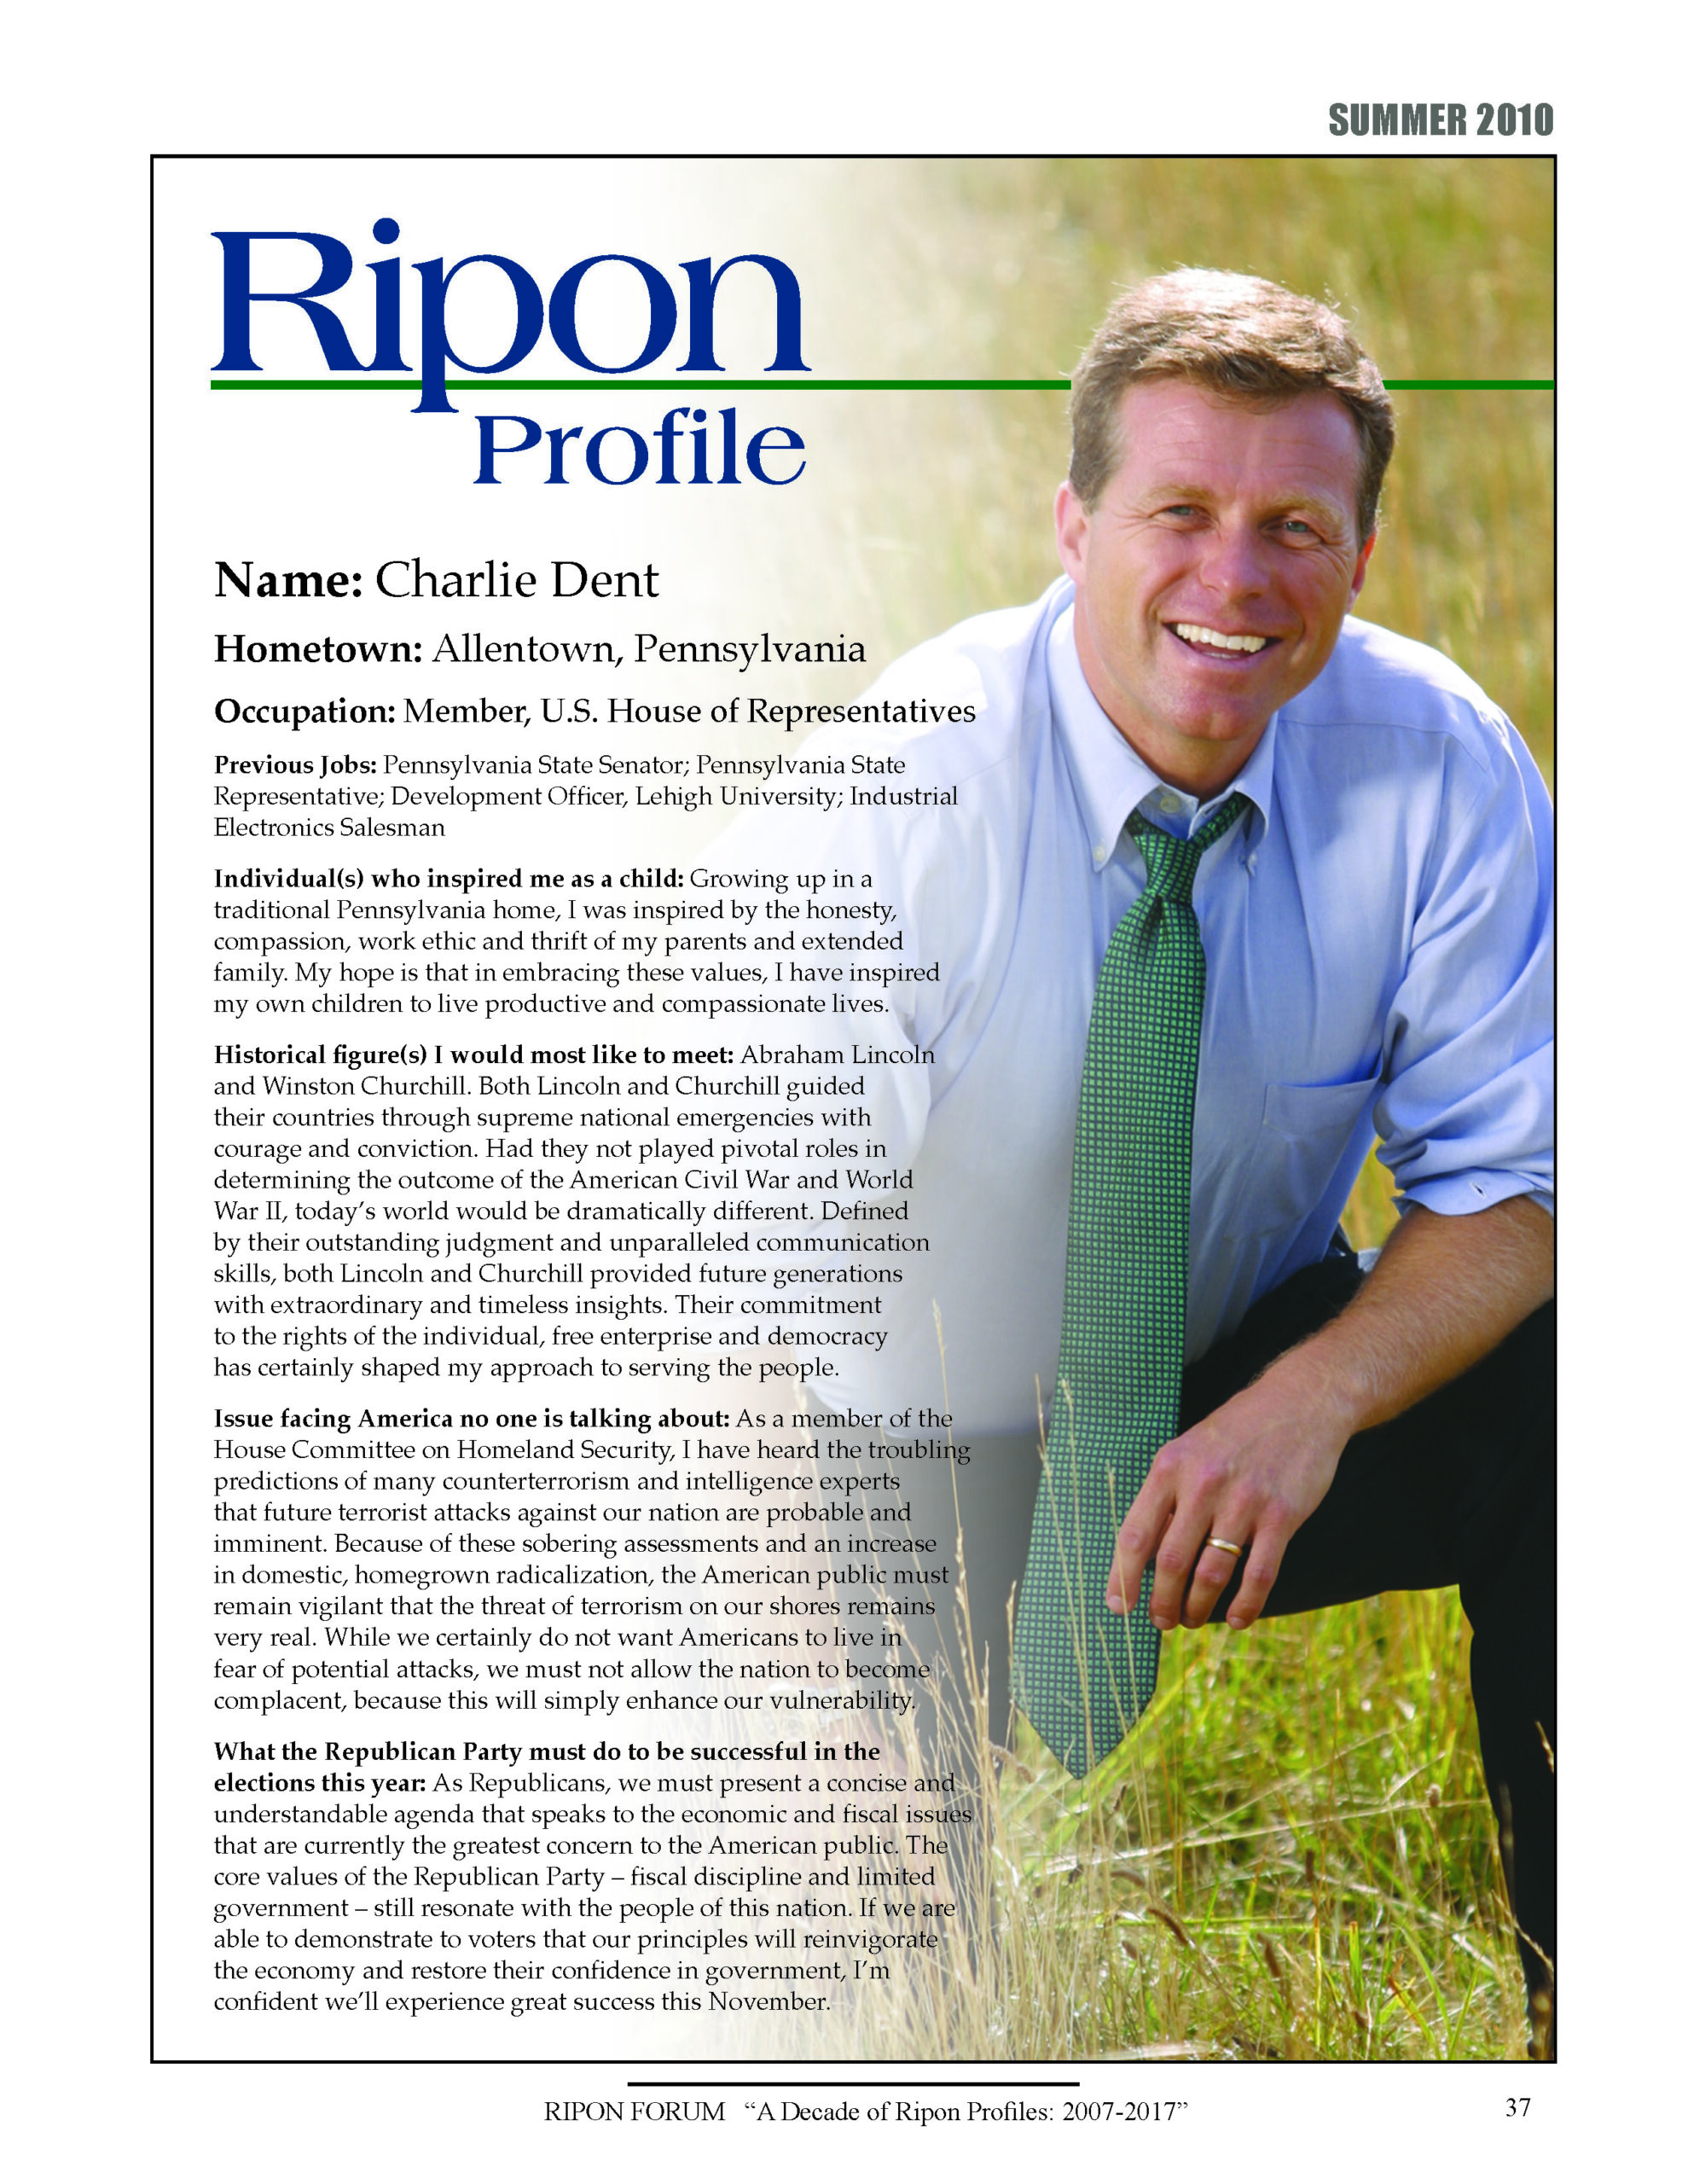 Ripon Profile of Charlie Dent